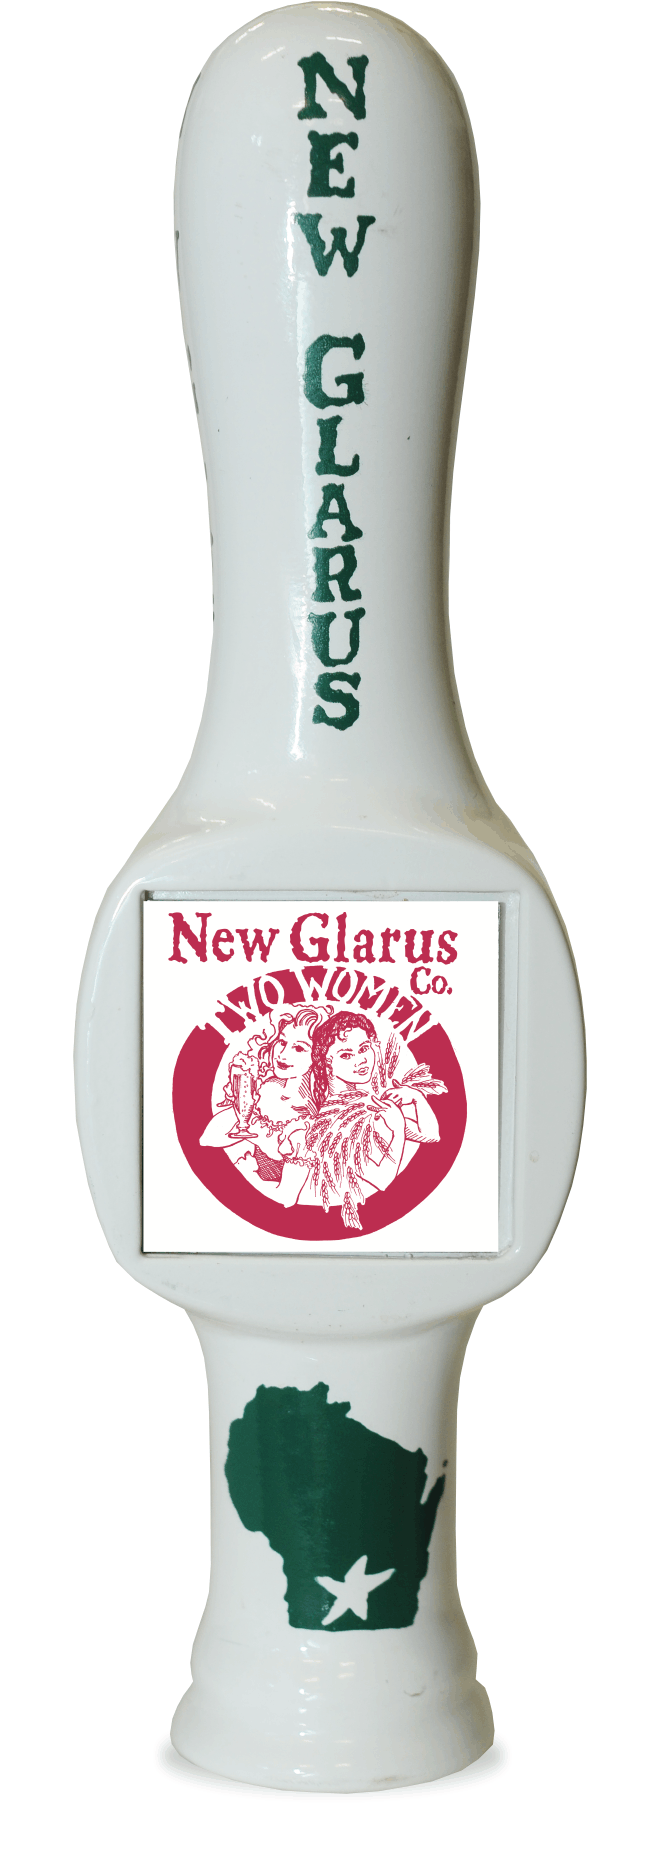 New Glarus Two Women has a beverage tapper!